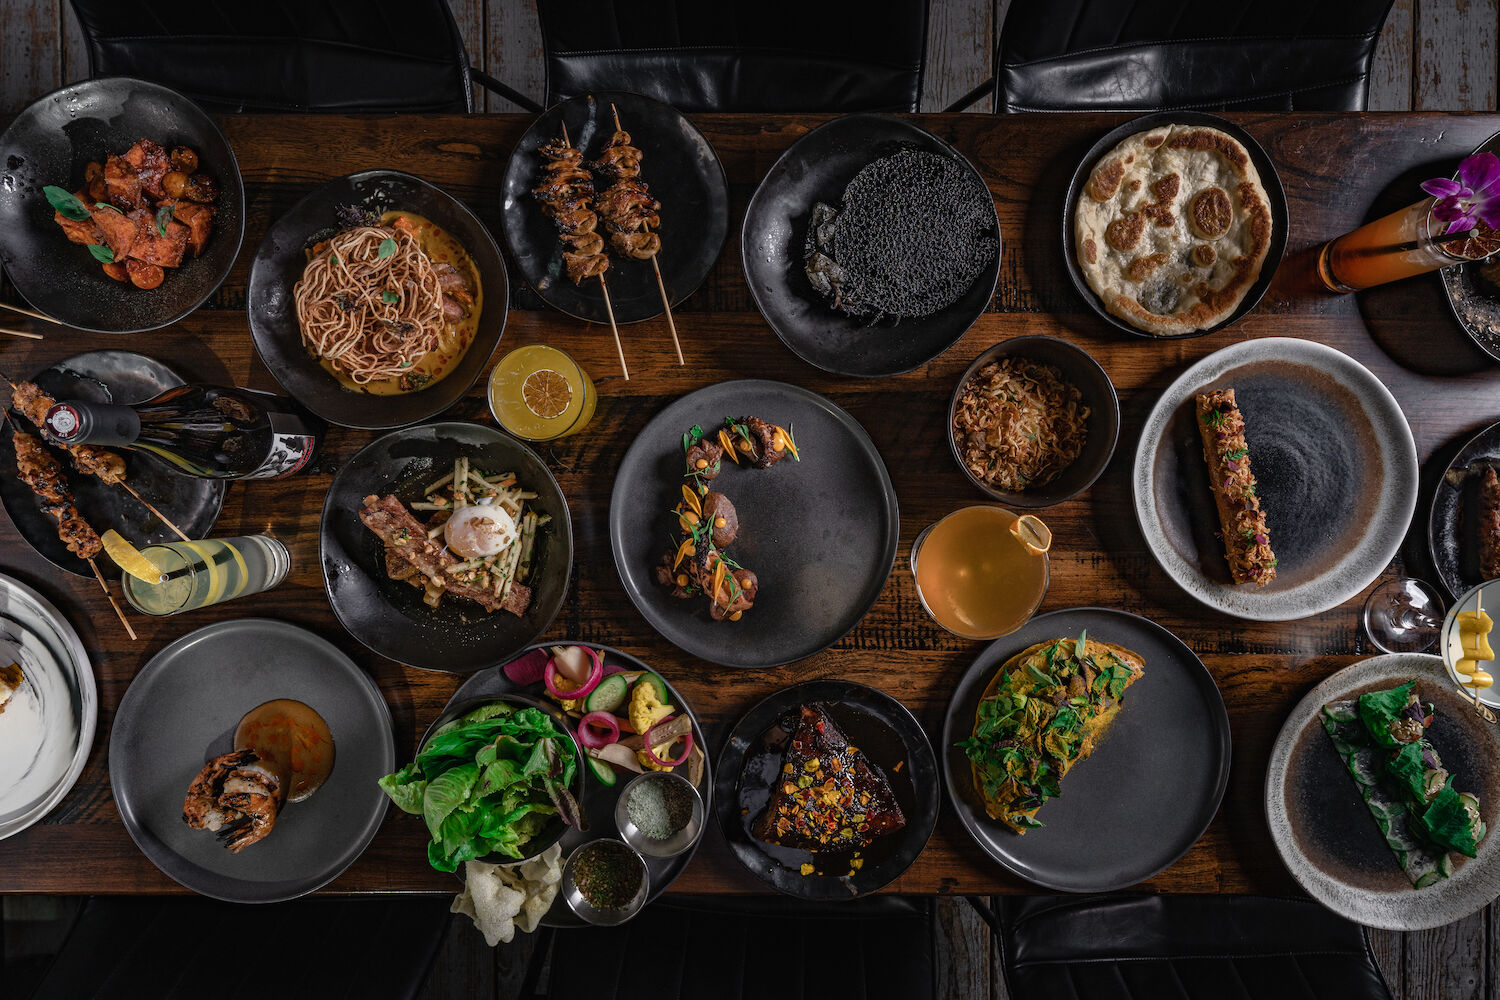 Hoxton Manor - Southeast Asian feast